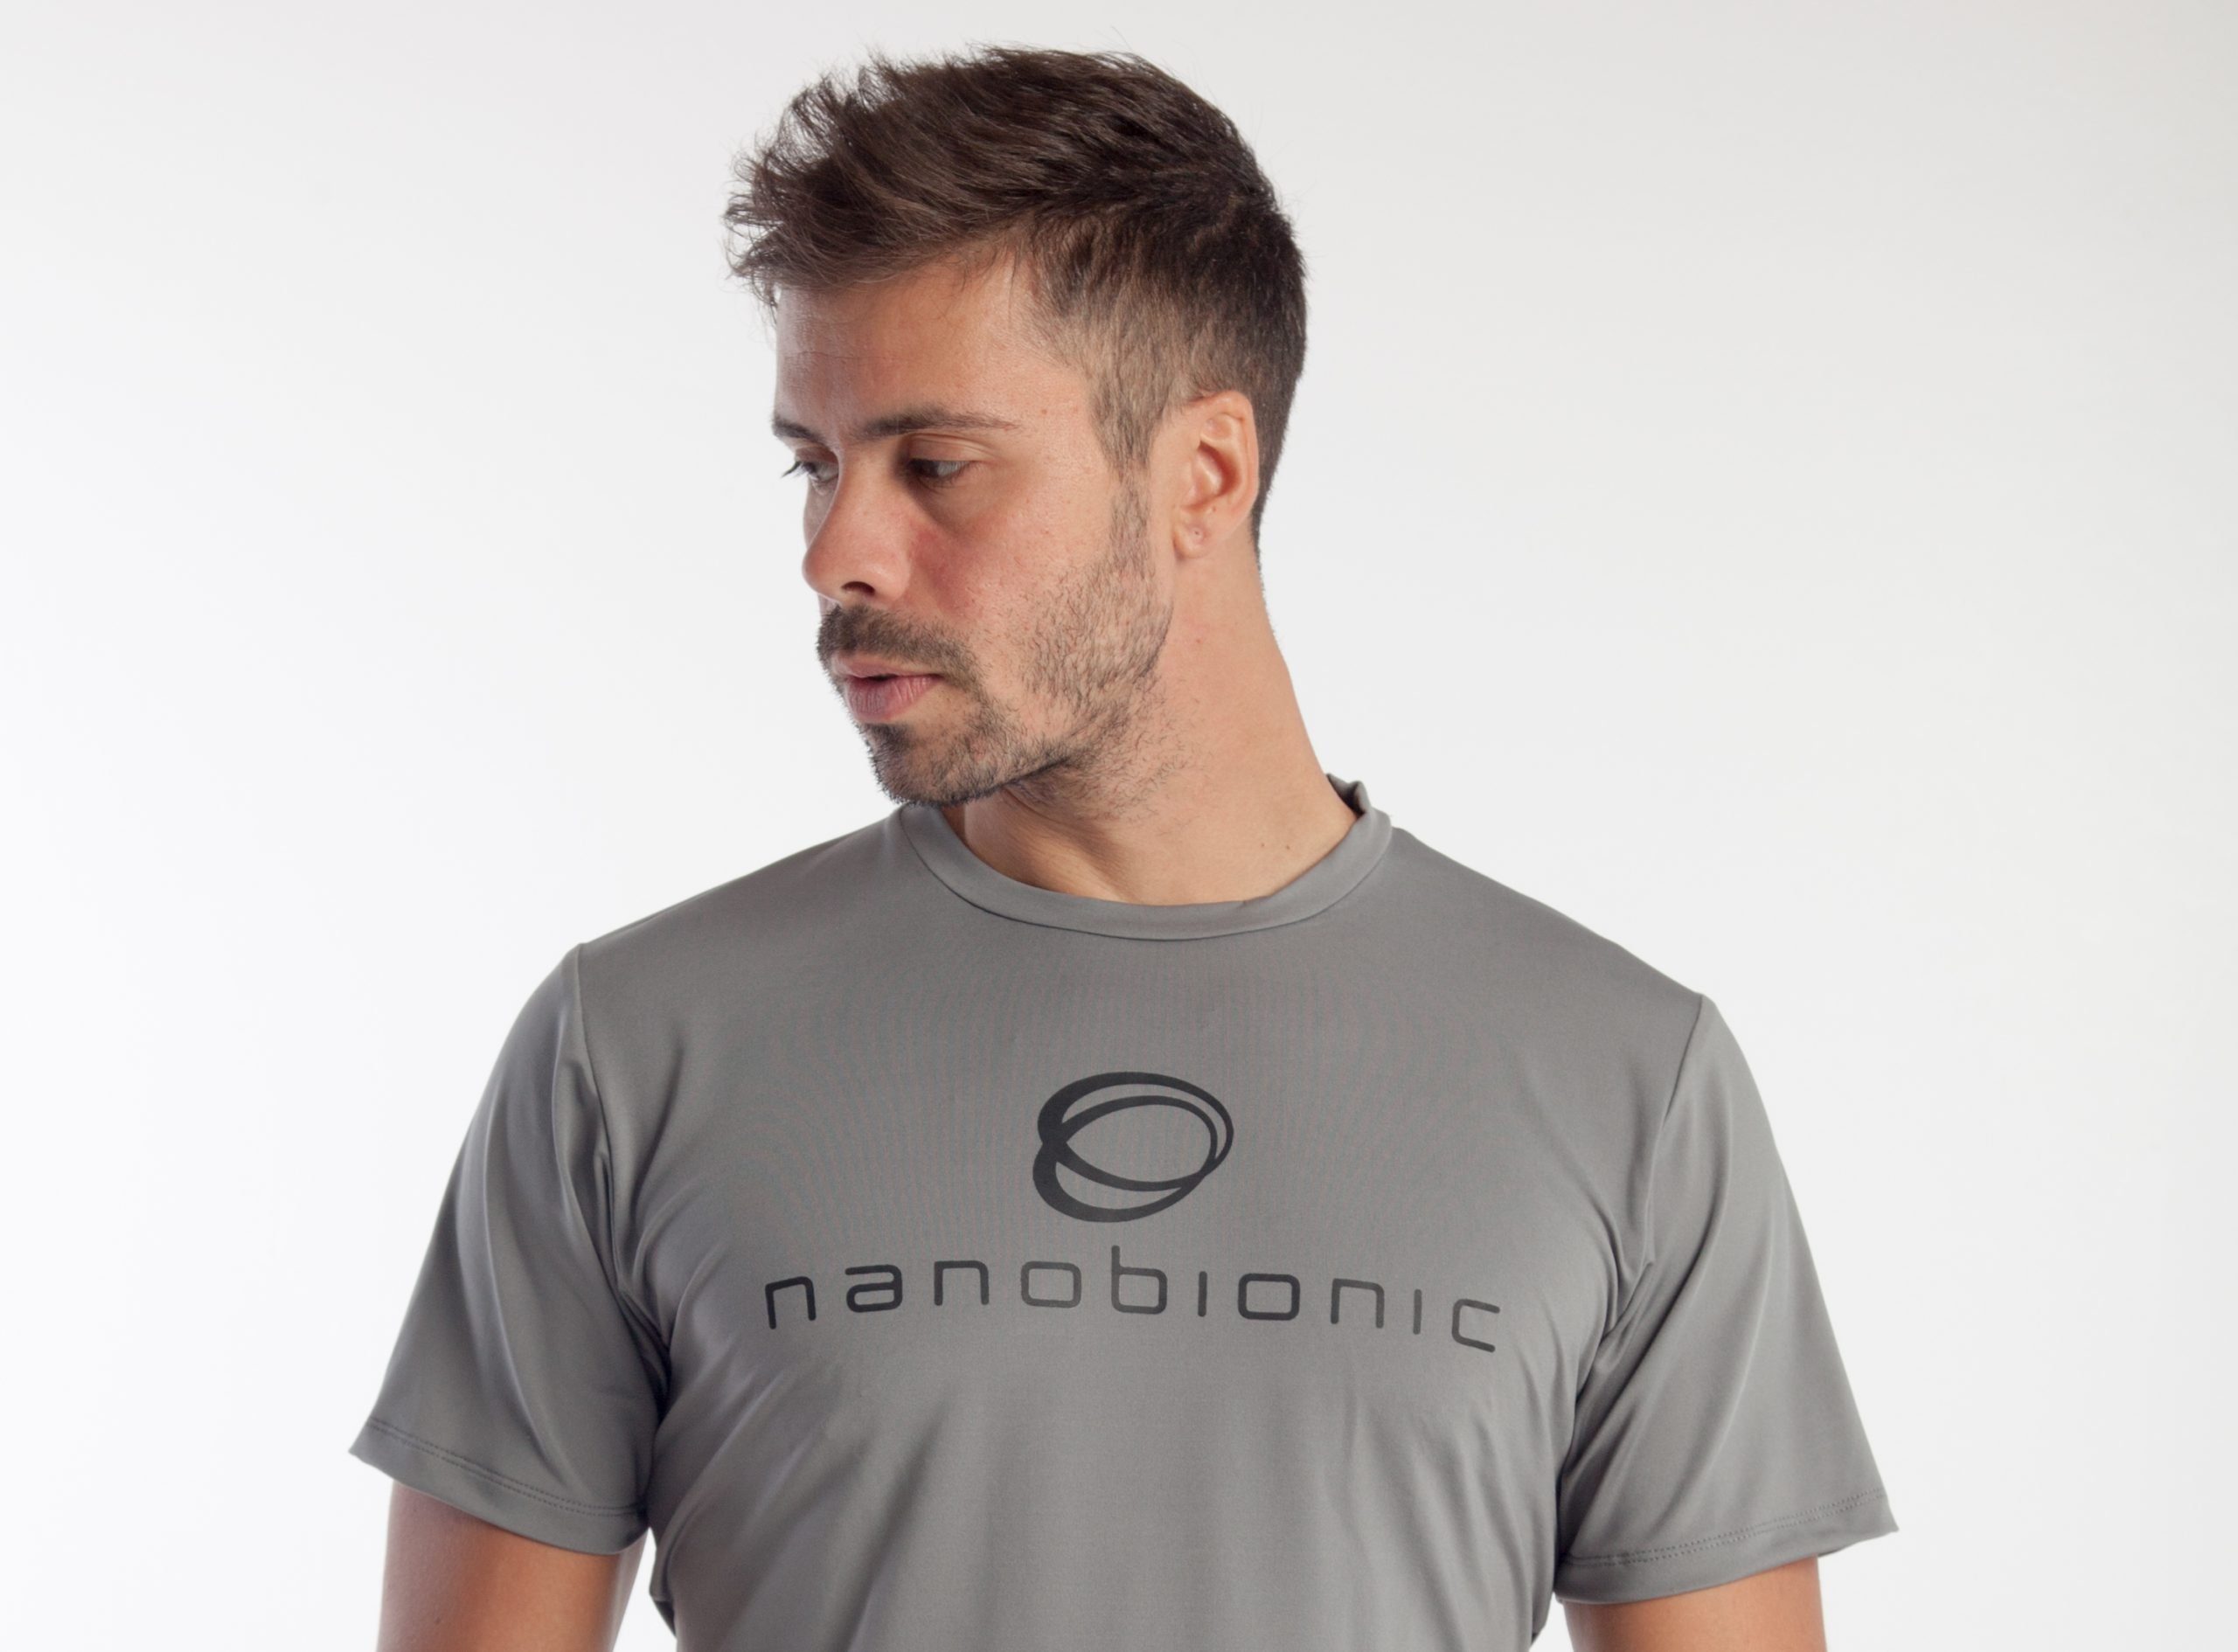 NANOBIONIC® Funktionsshirt Energiequelle!!, I-Tech eine NANOBIONIC®-Technologie, nahezu Nanobionic® exklusive Iconic T-shirt und NASA (grau/schwarz) endlose www.nanobionic.de NANOBIONIC® (Innovative Award) 